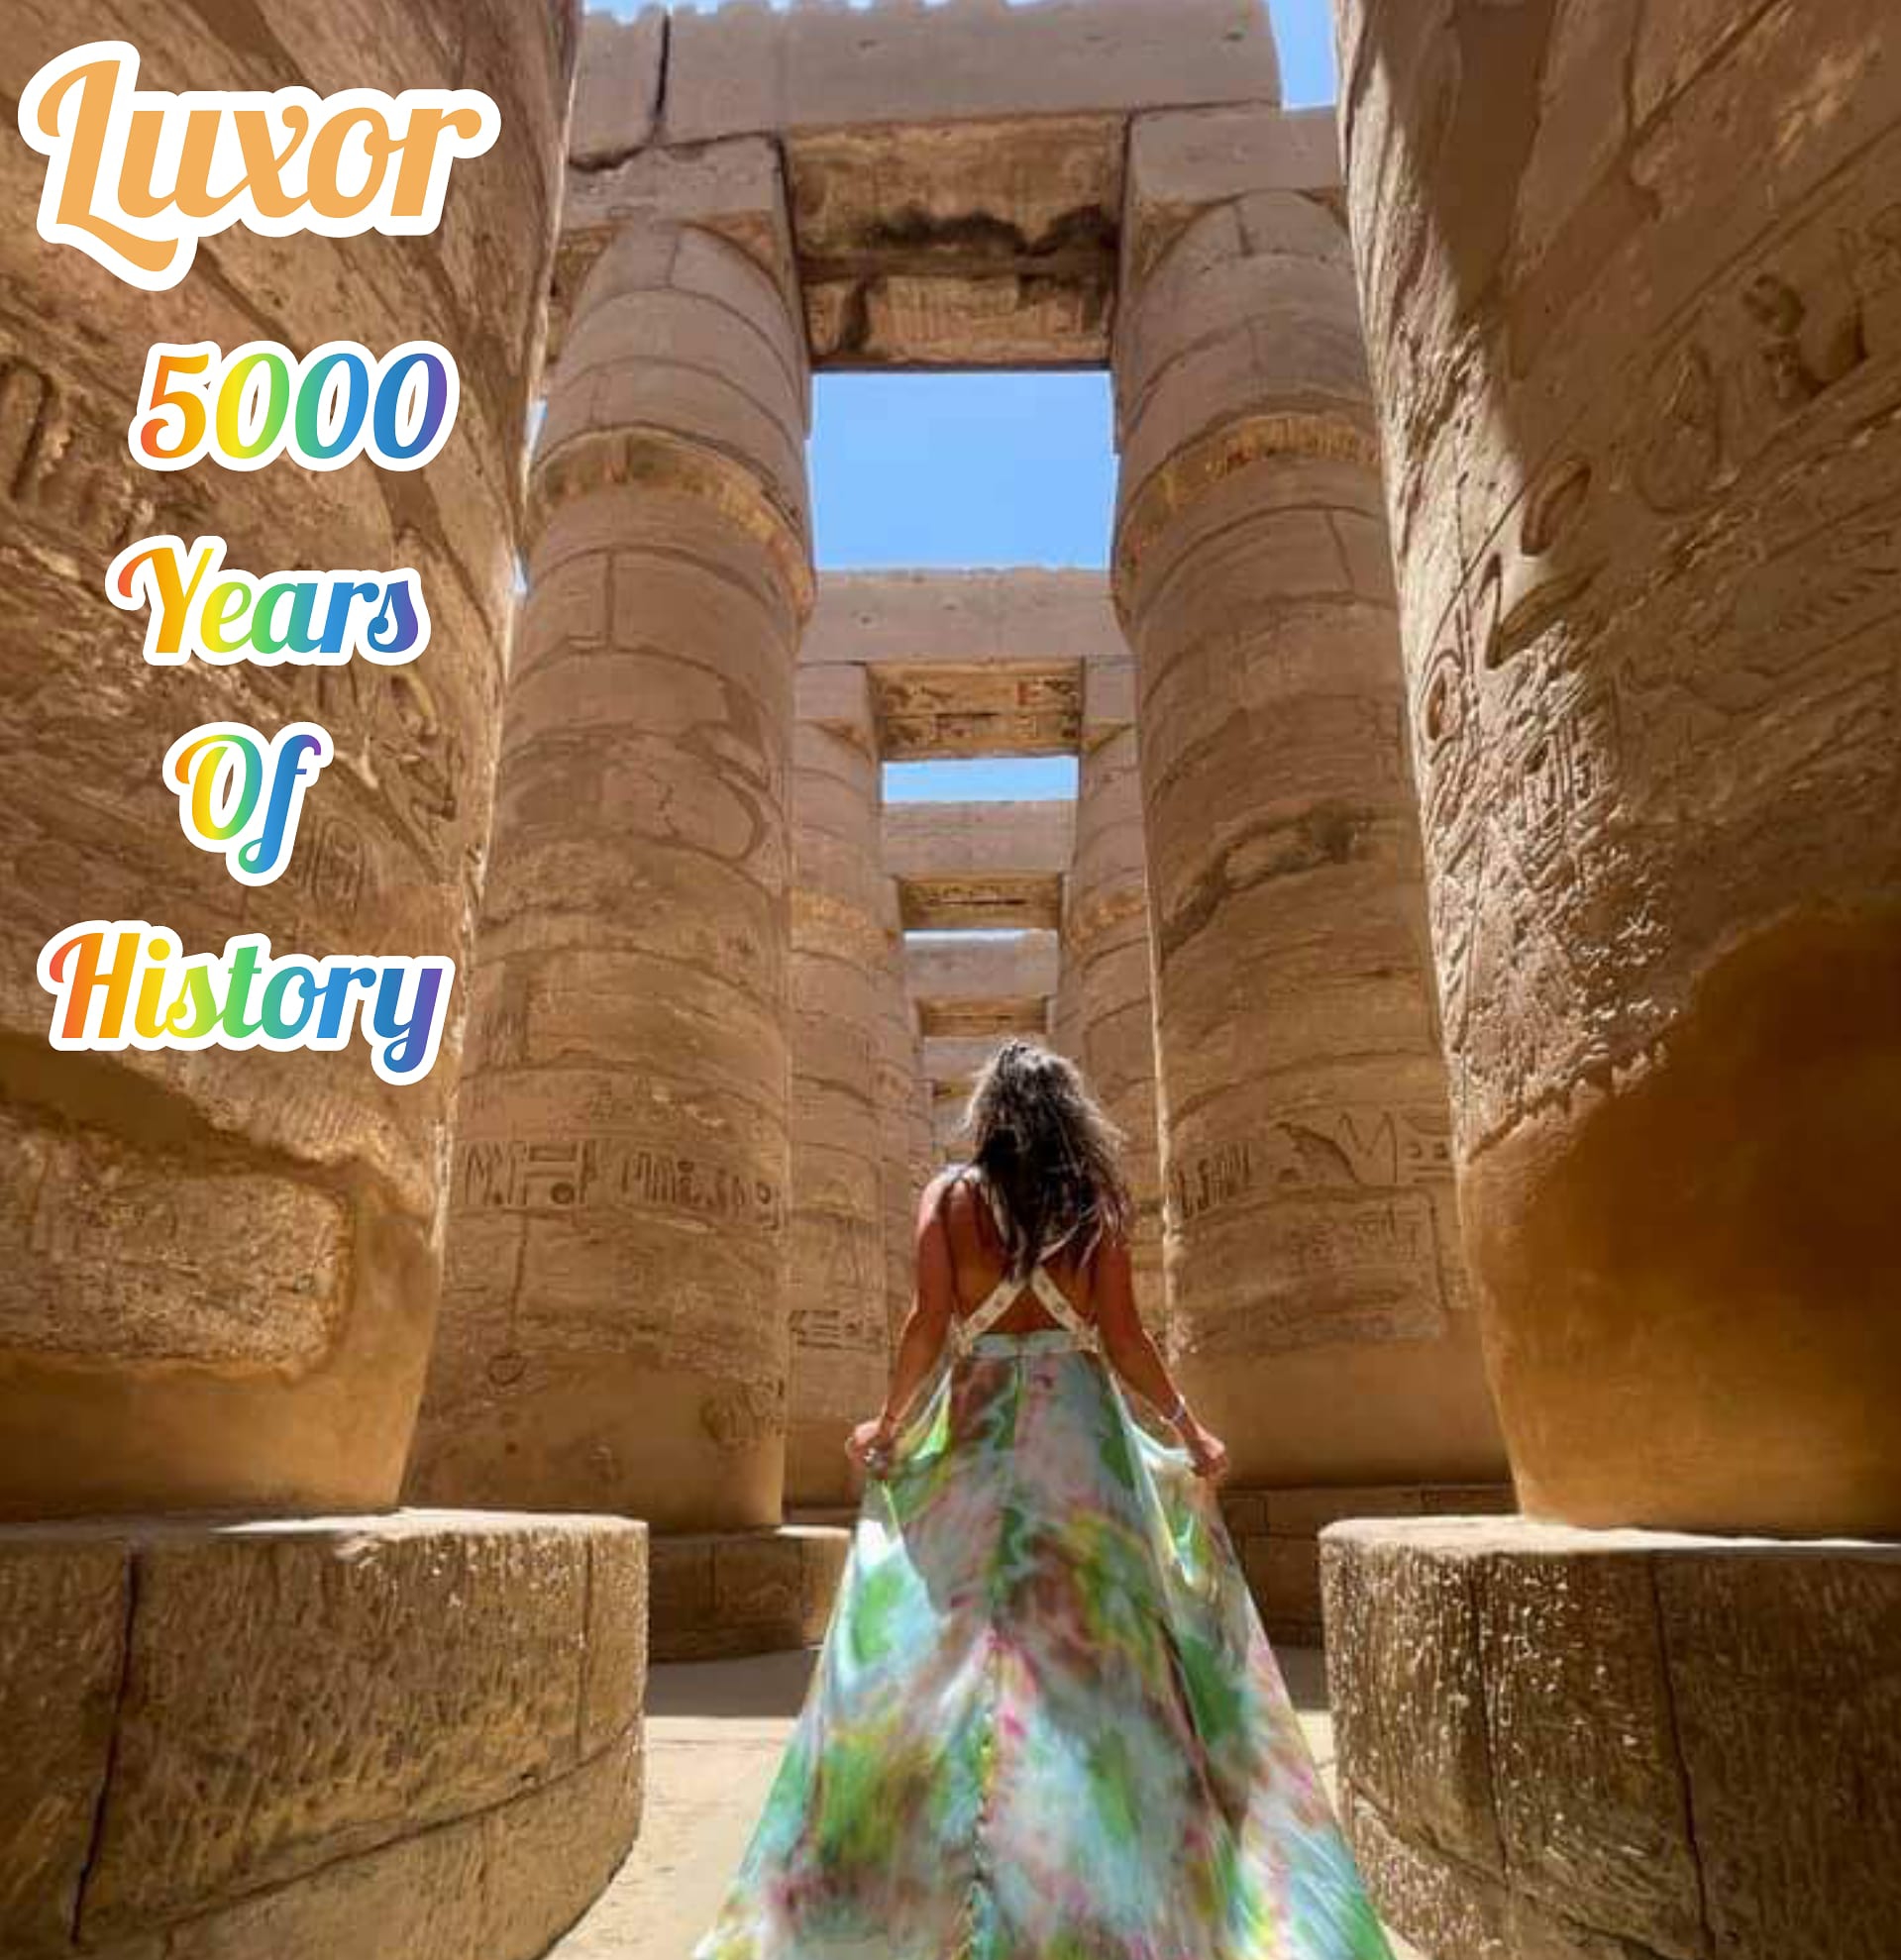 Ancient pharaonic civilization in Egypt: (Karnak Temple) Luxor